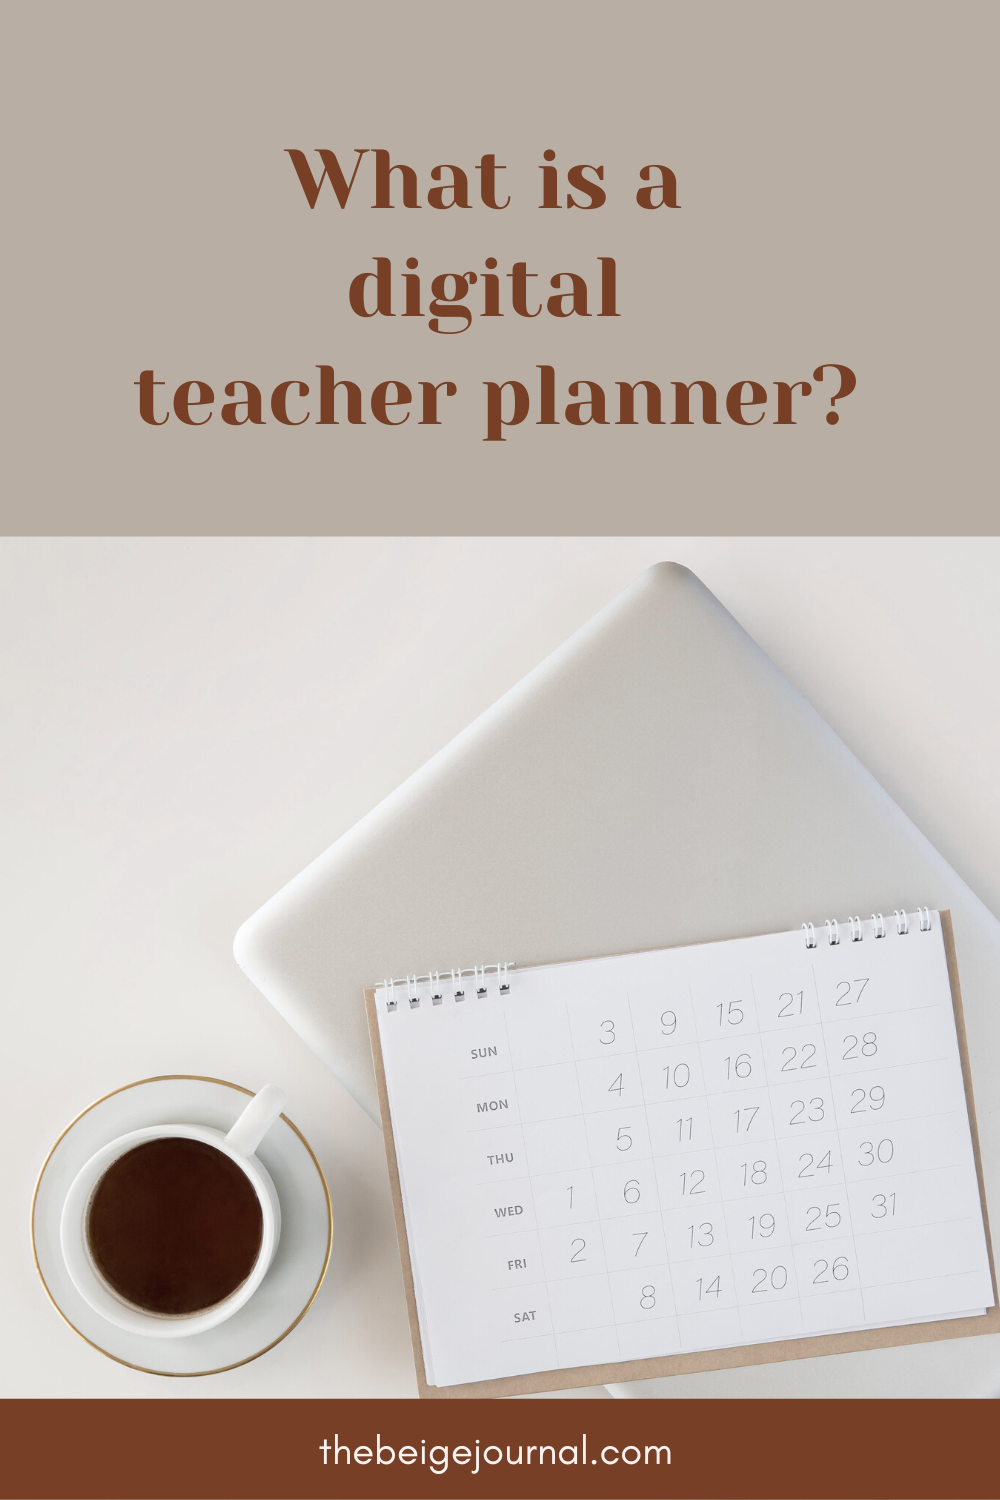 What is a digital teacher planner